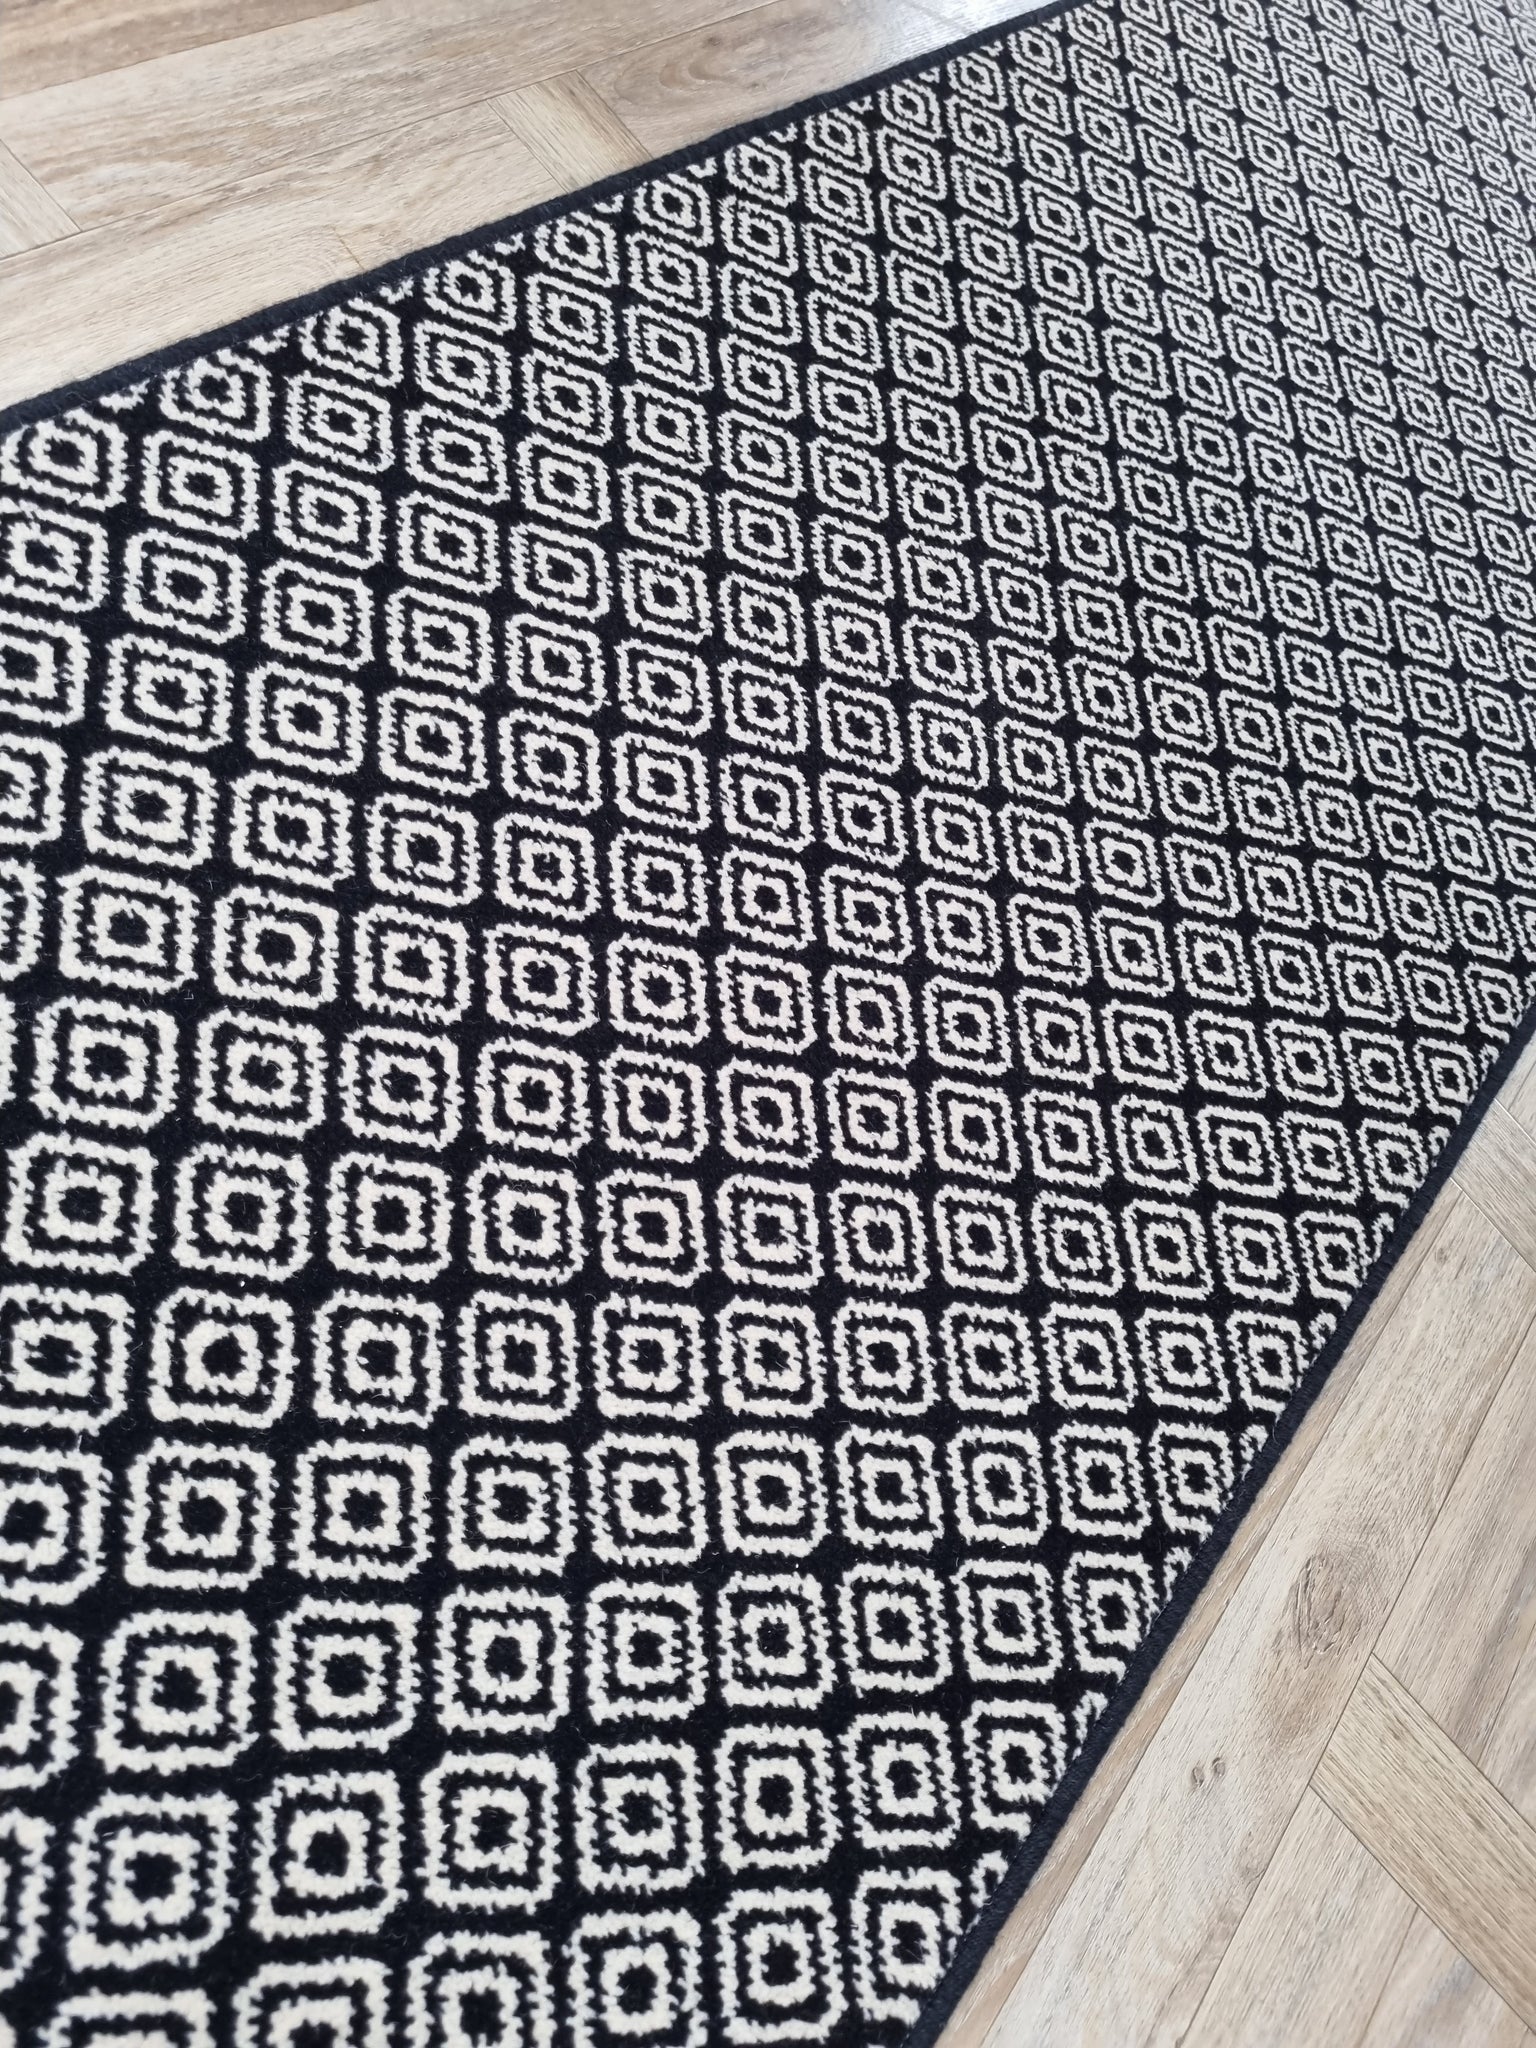 Black and white geometric pattern carpet stair runner wool blend